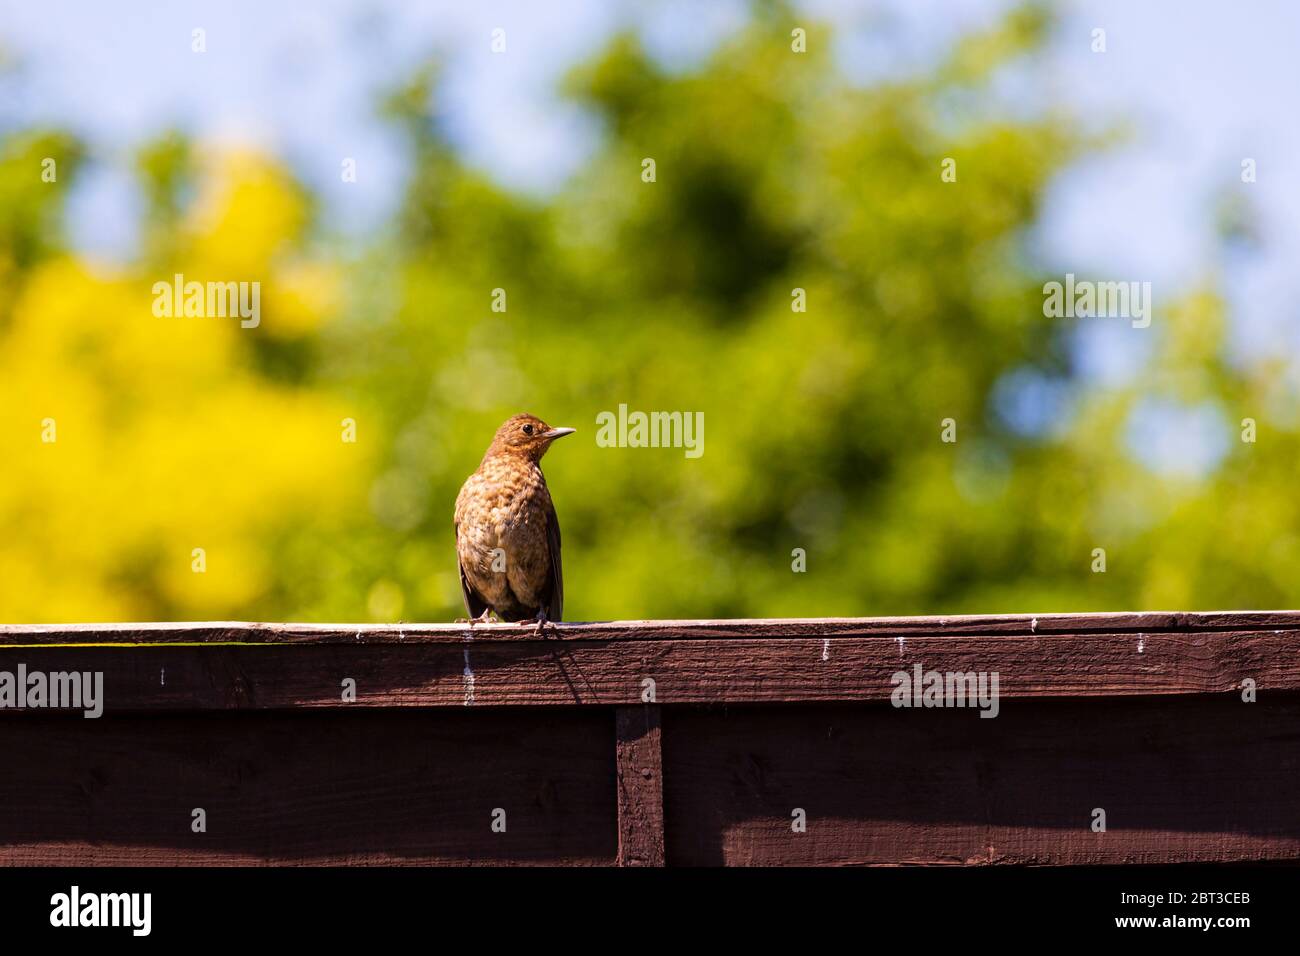 Juvenile Blackbird fledgling, Turdus Merula, perched on a wooden fence Stock Photo